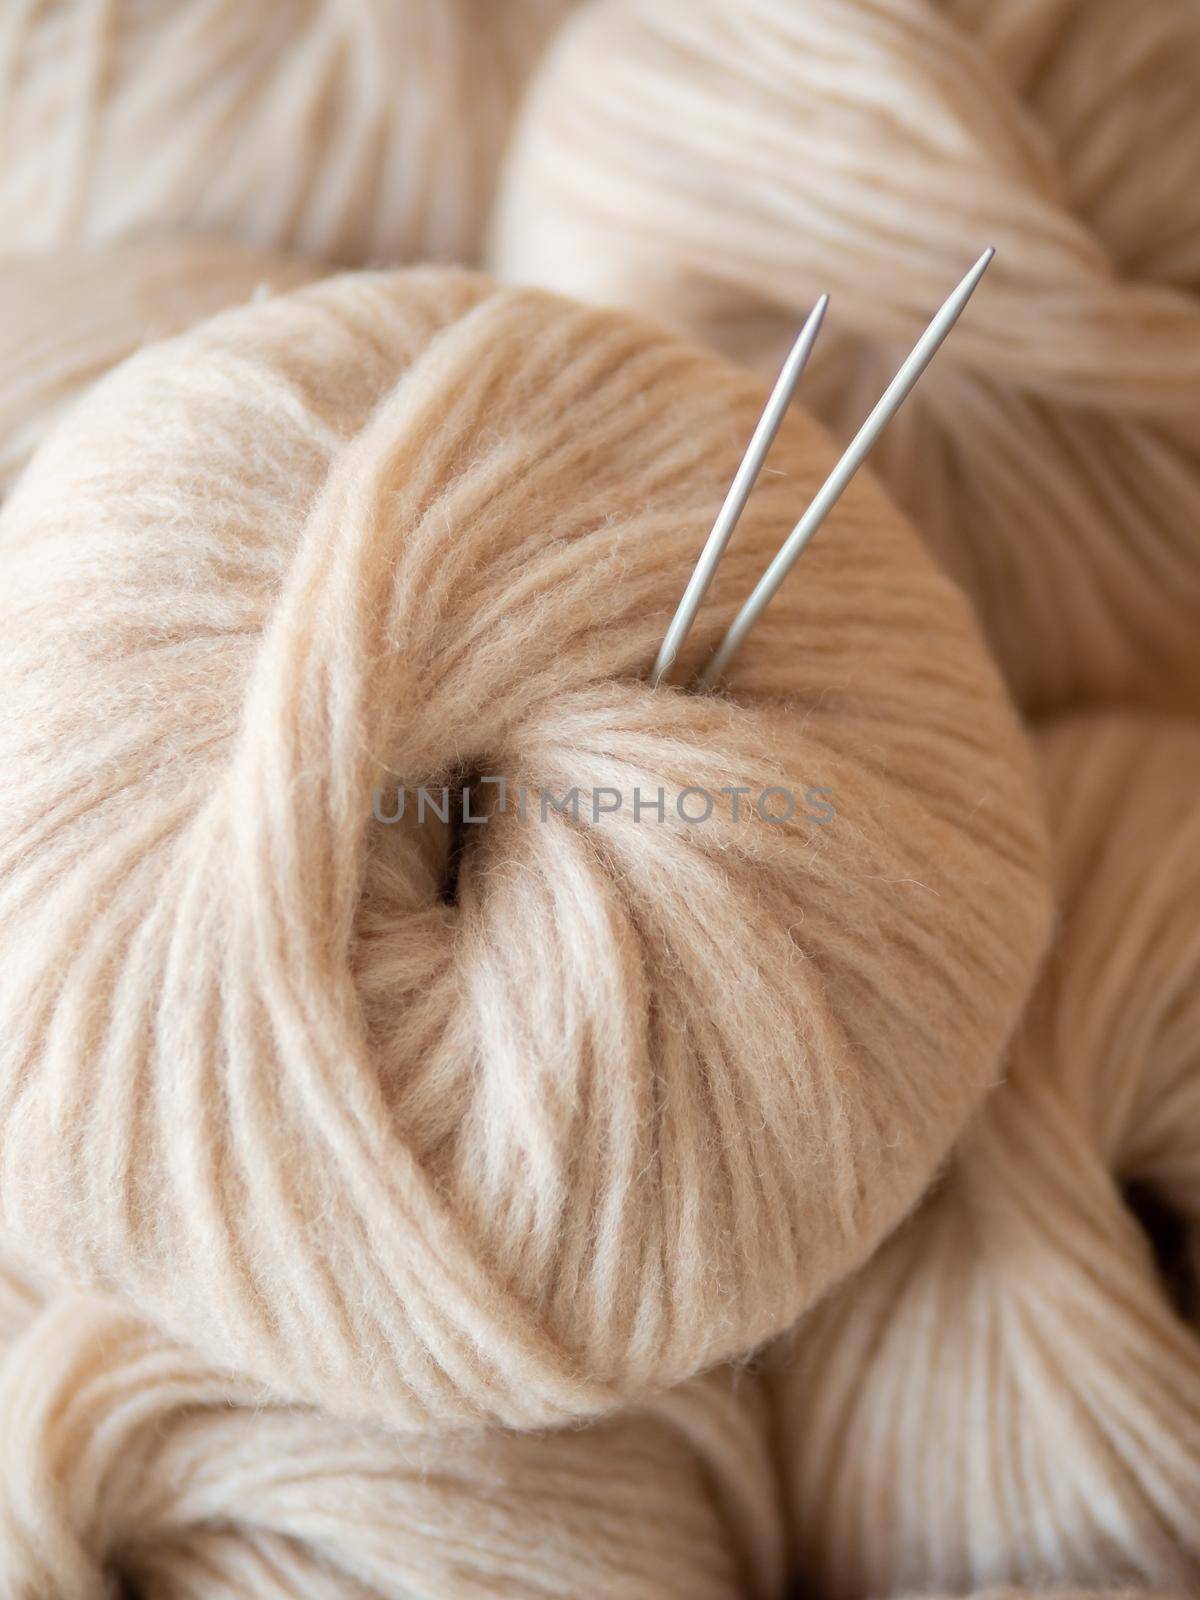 Aesthetic beige yarn skein, close up by fascinadora